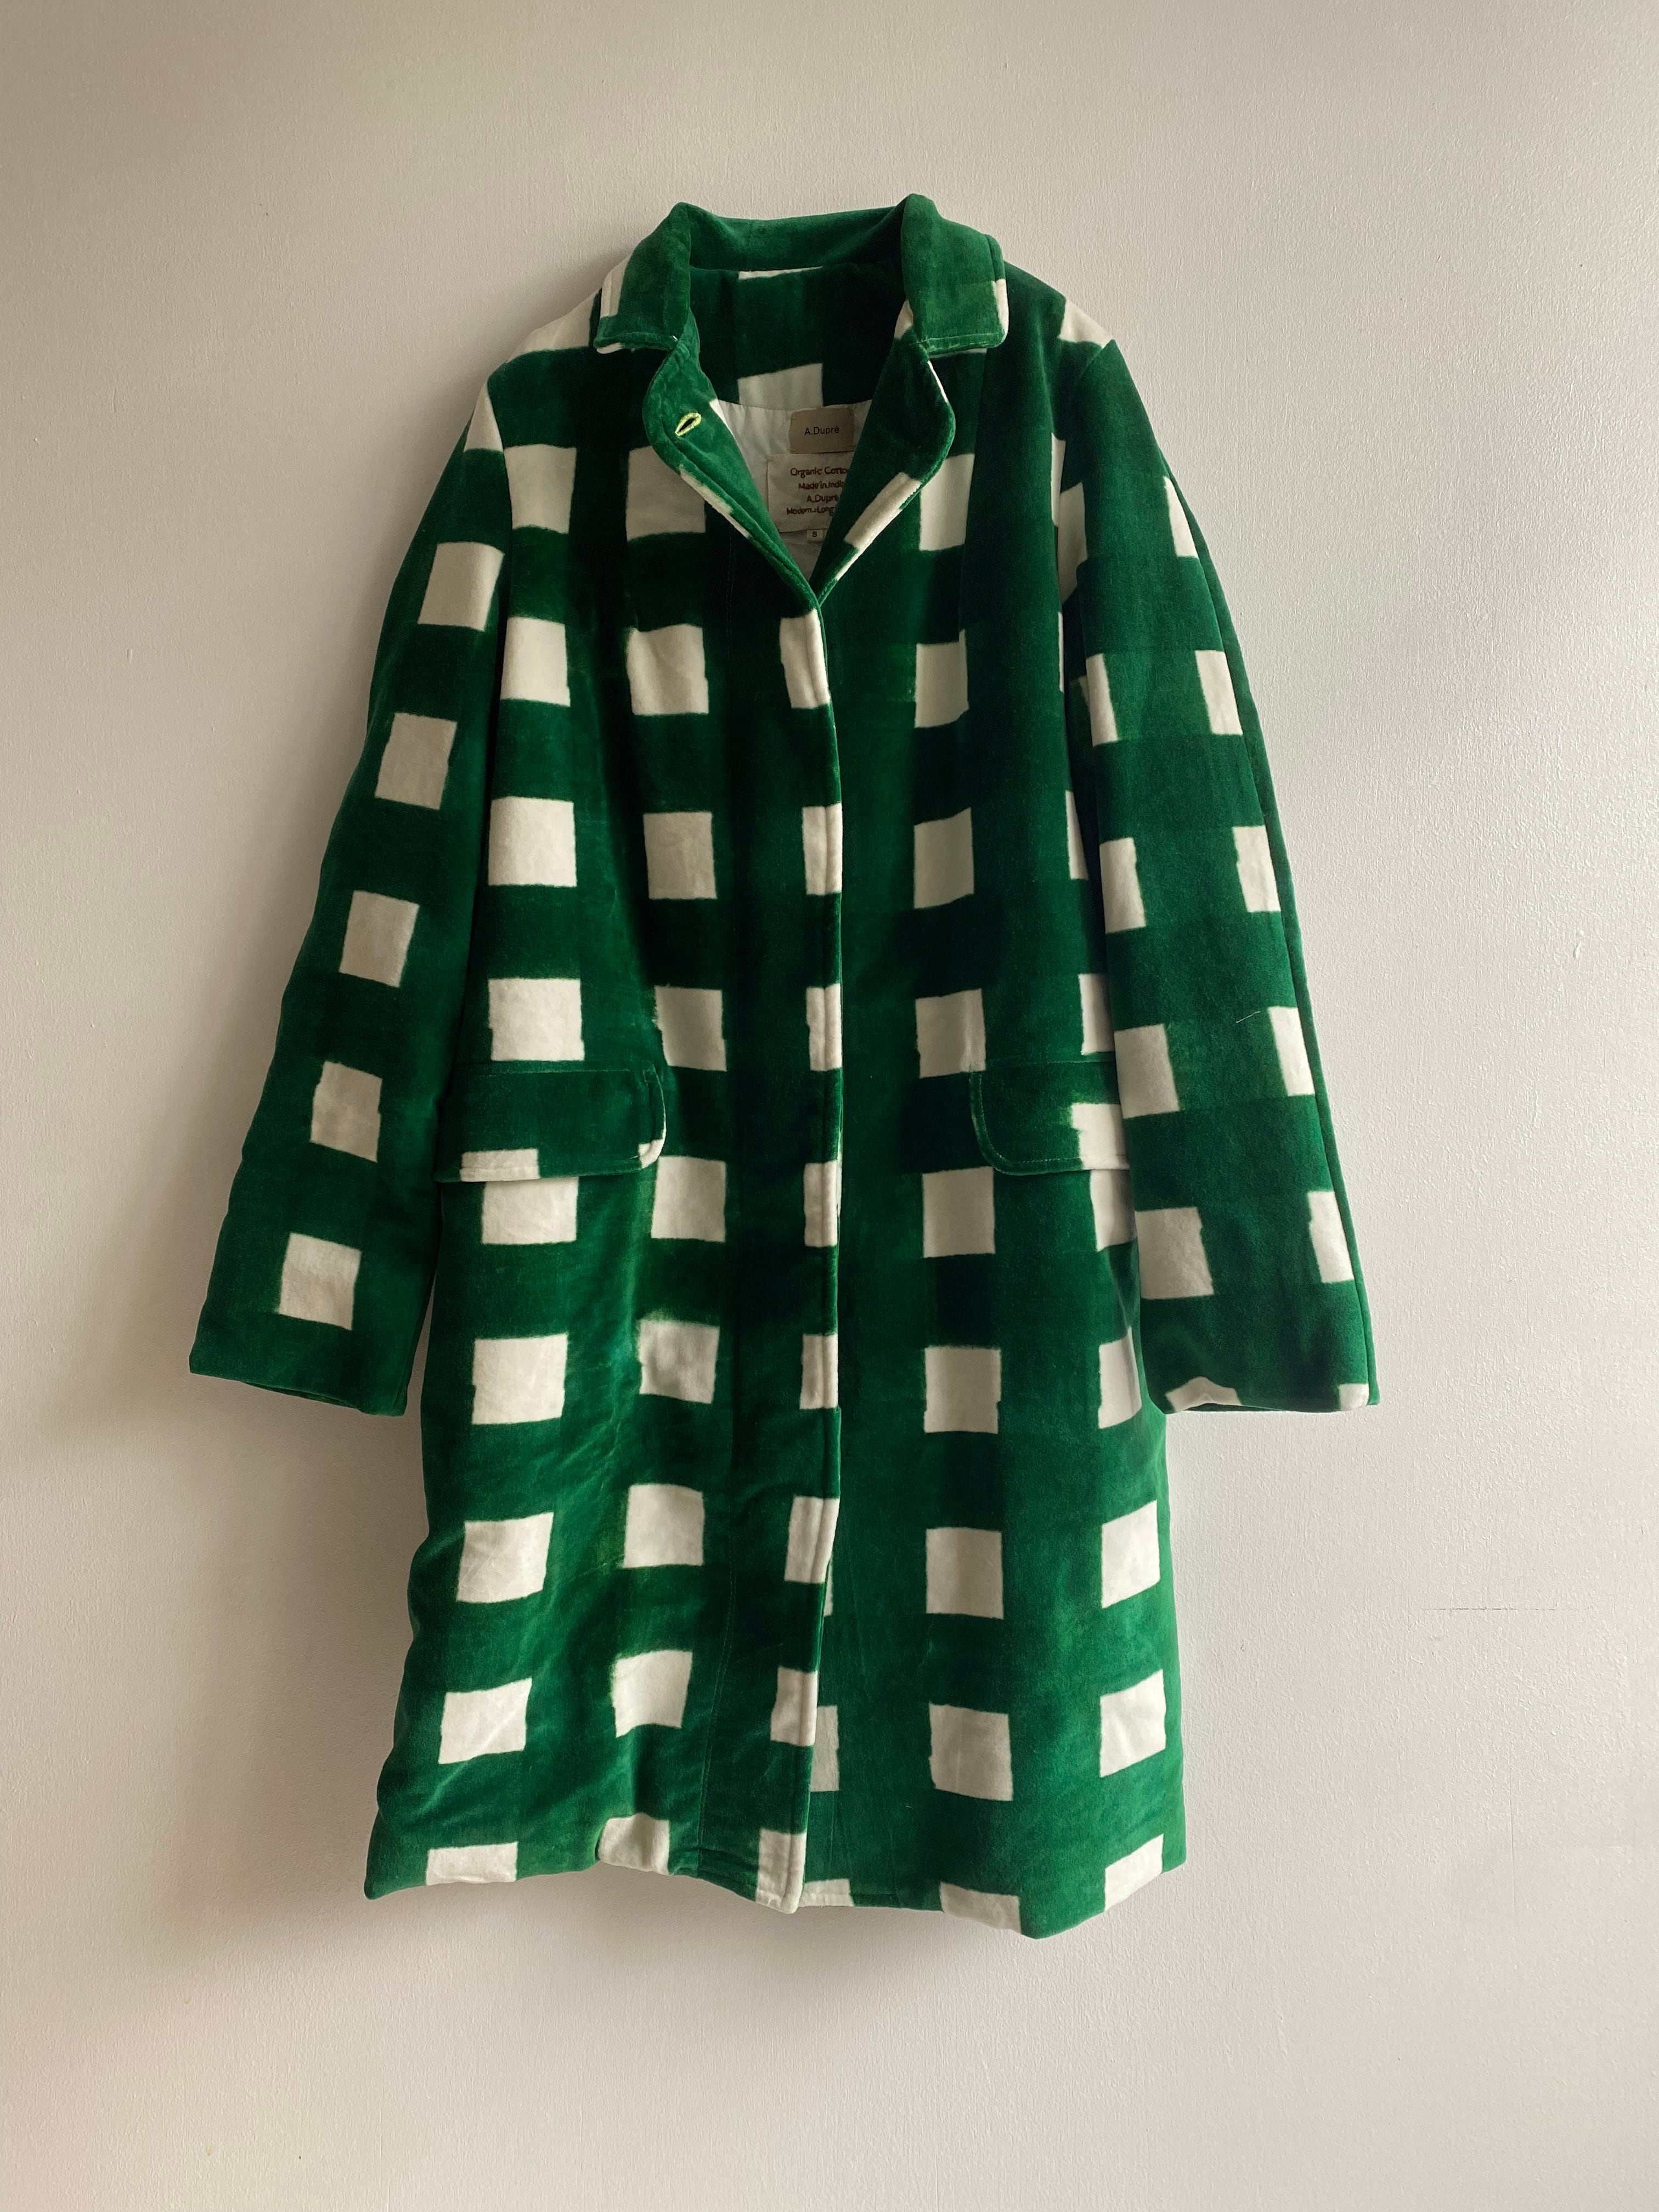 Two style sleeve coat "block print big size gingham check green" cotton velvet